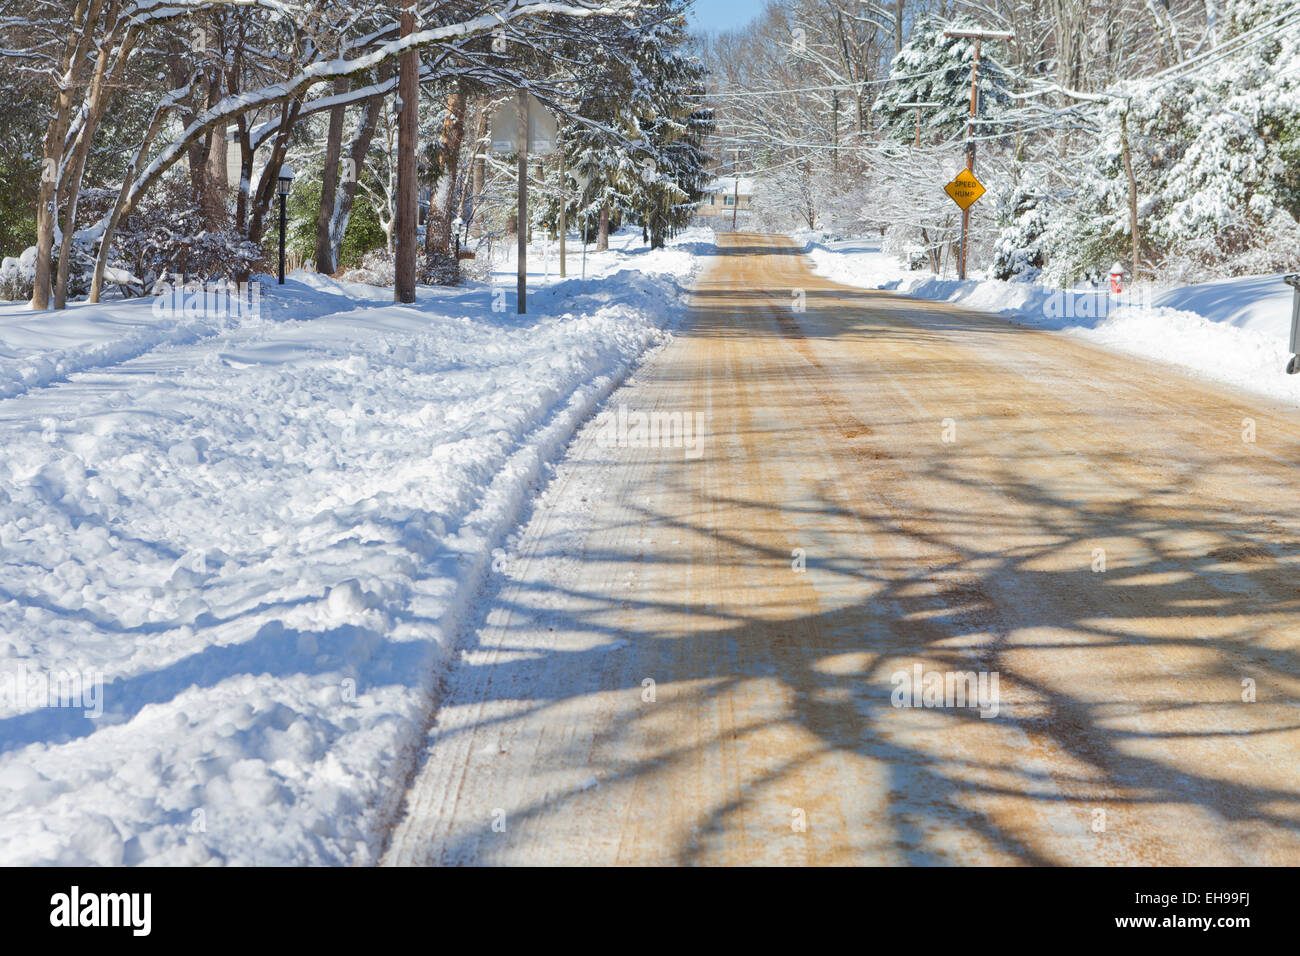 Snow covered residential street - Virginia USA Stock Photo